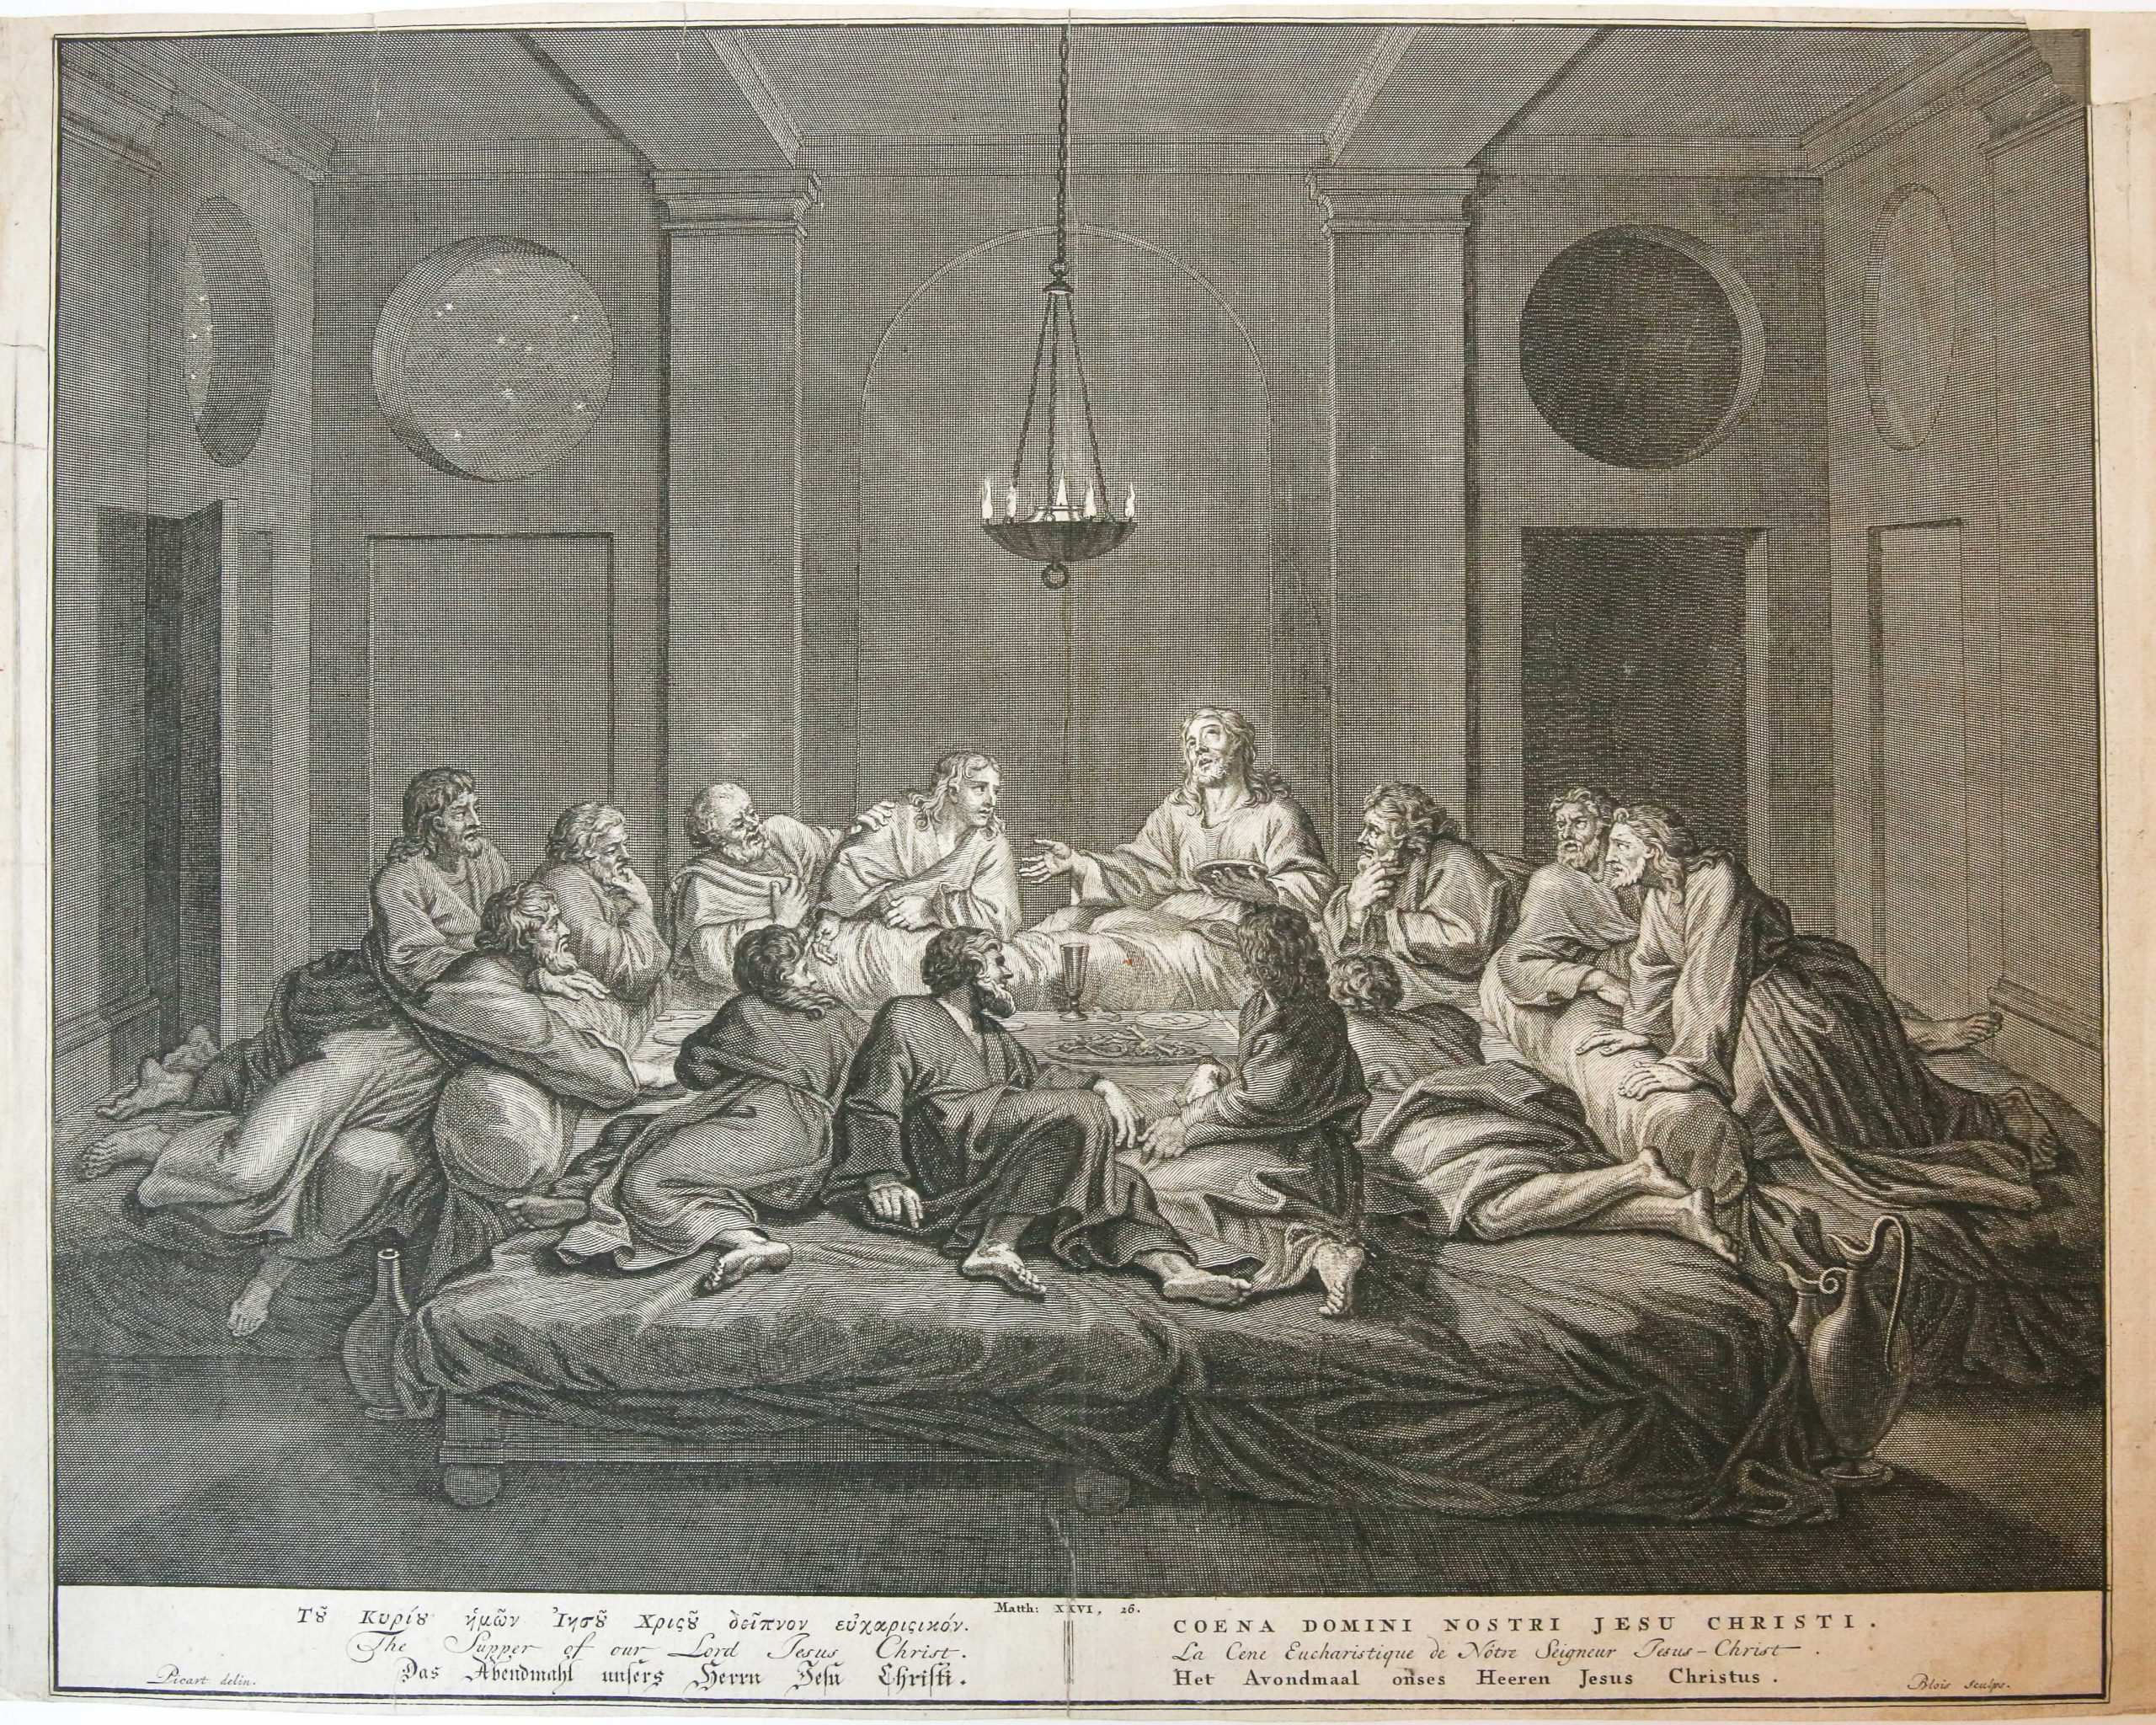 [Antique print, engraving] Het Avondmaal onses Heeren Jesus Christus; The Last Supper, published 1728.